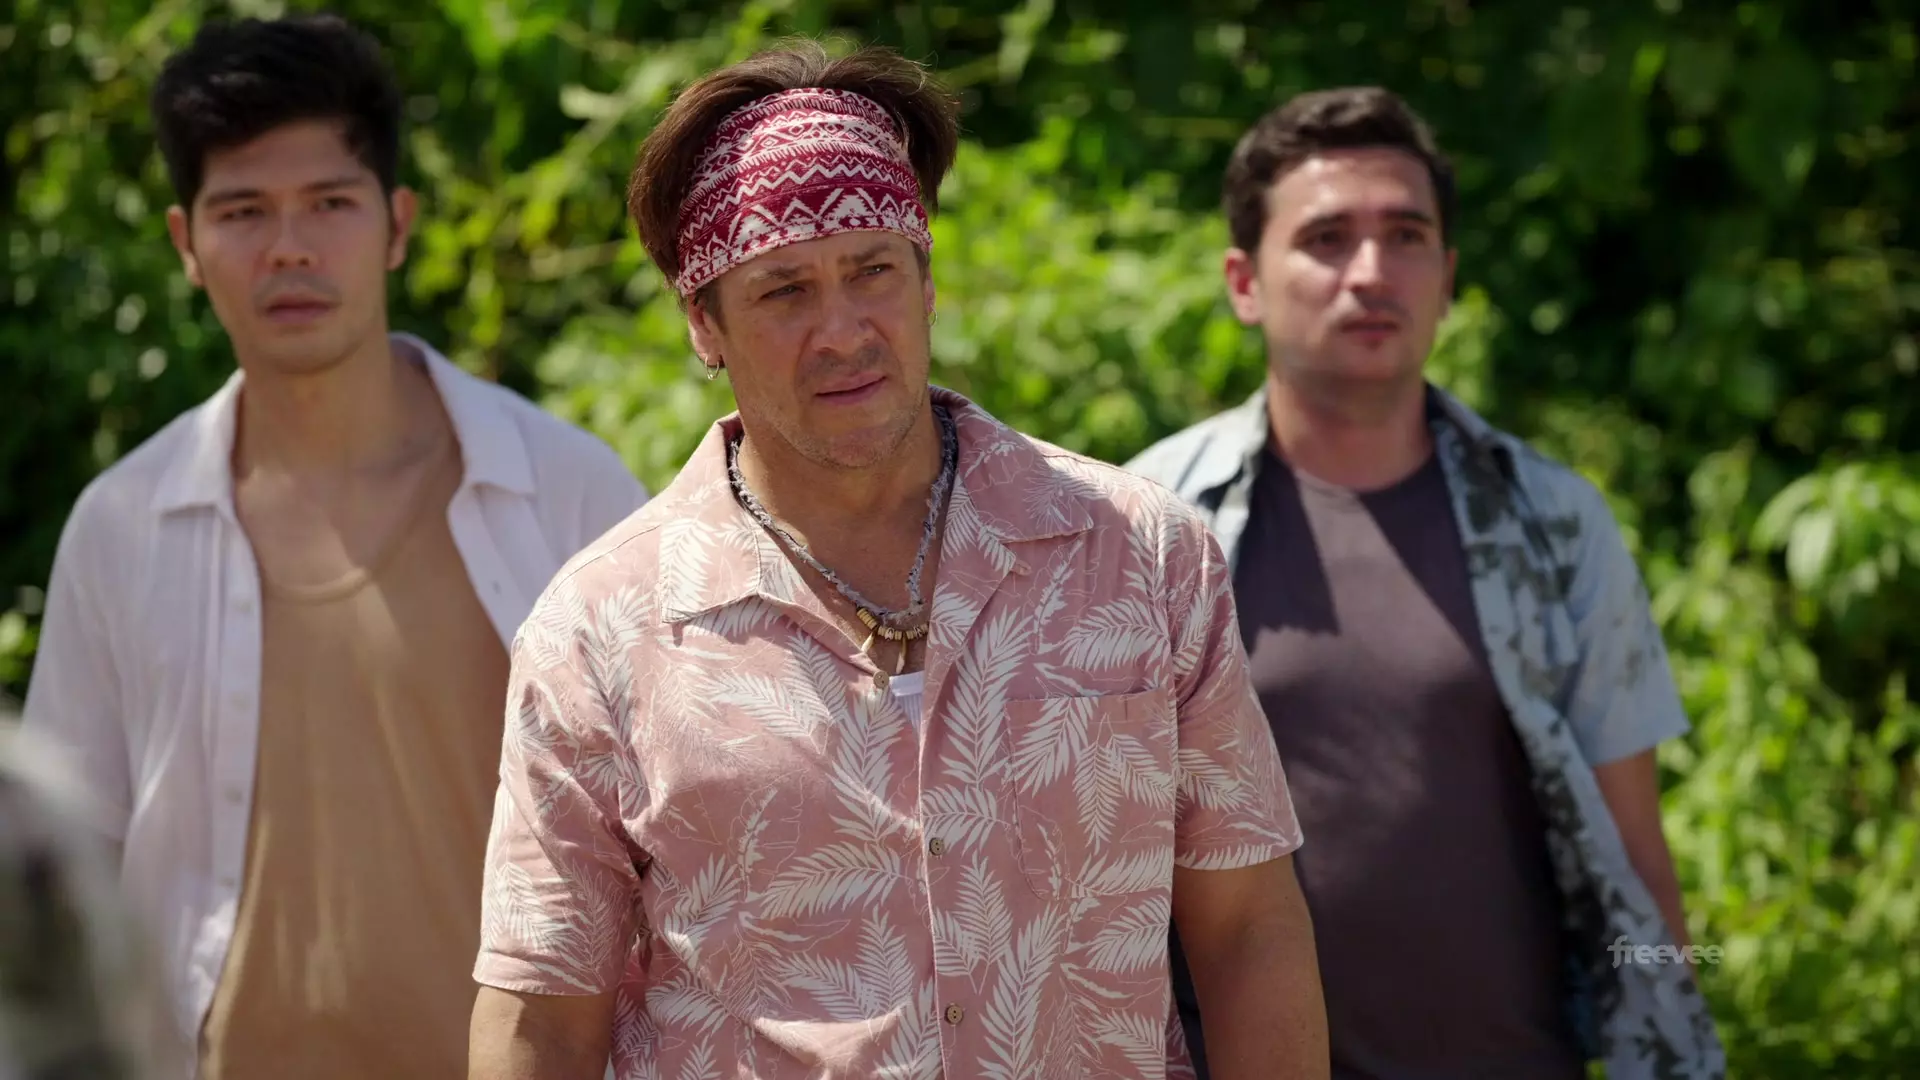 Worn on Almost Paradise TV Show - Hawaiian Tropical Floral Cotton Linen Bottom Down Beach Shirt Worn by Christian Kane as Alex Walker, a former DEA agent